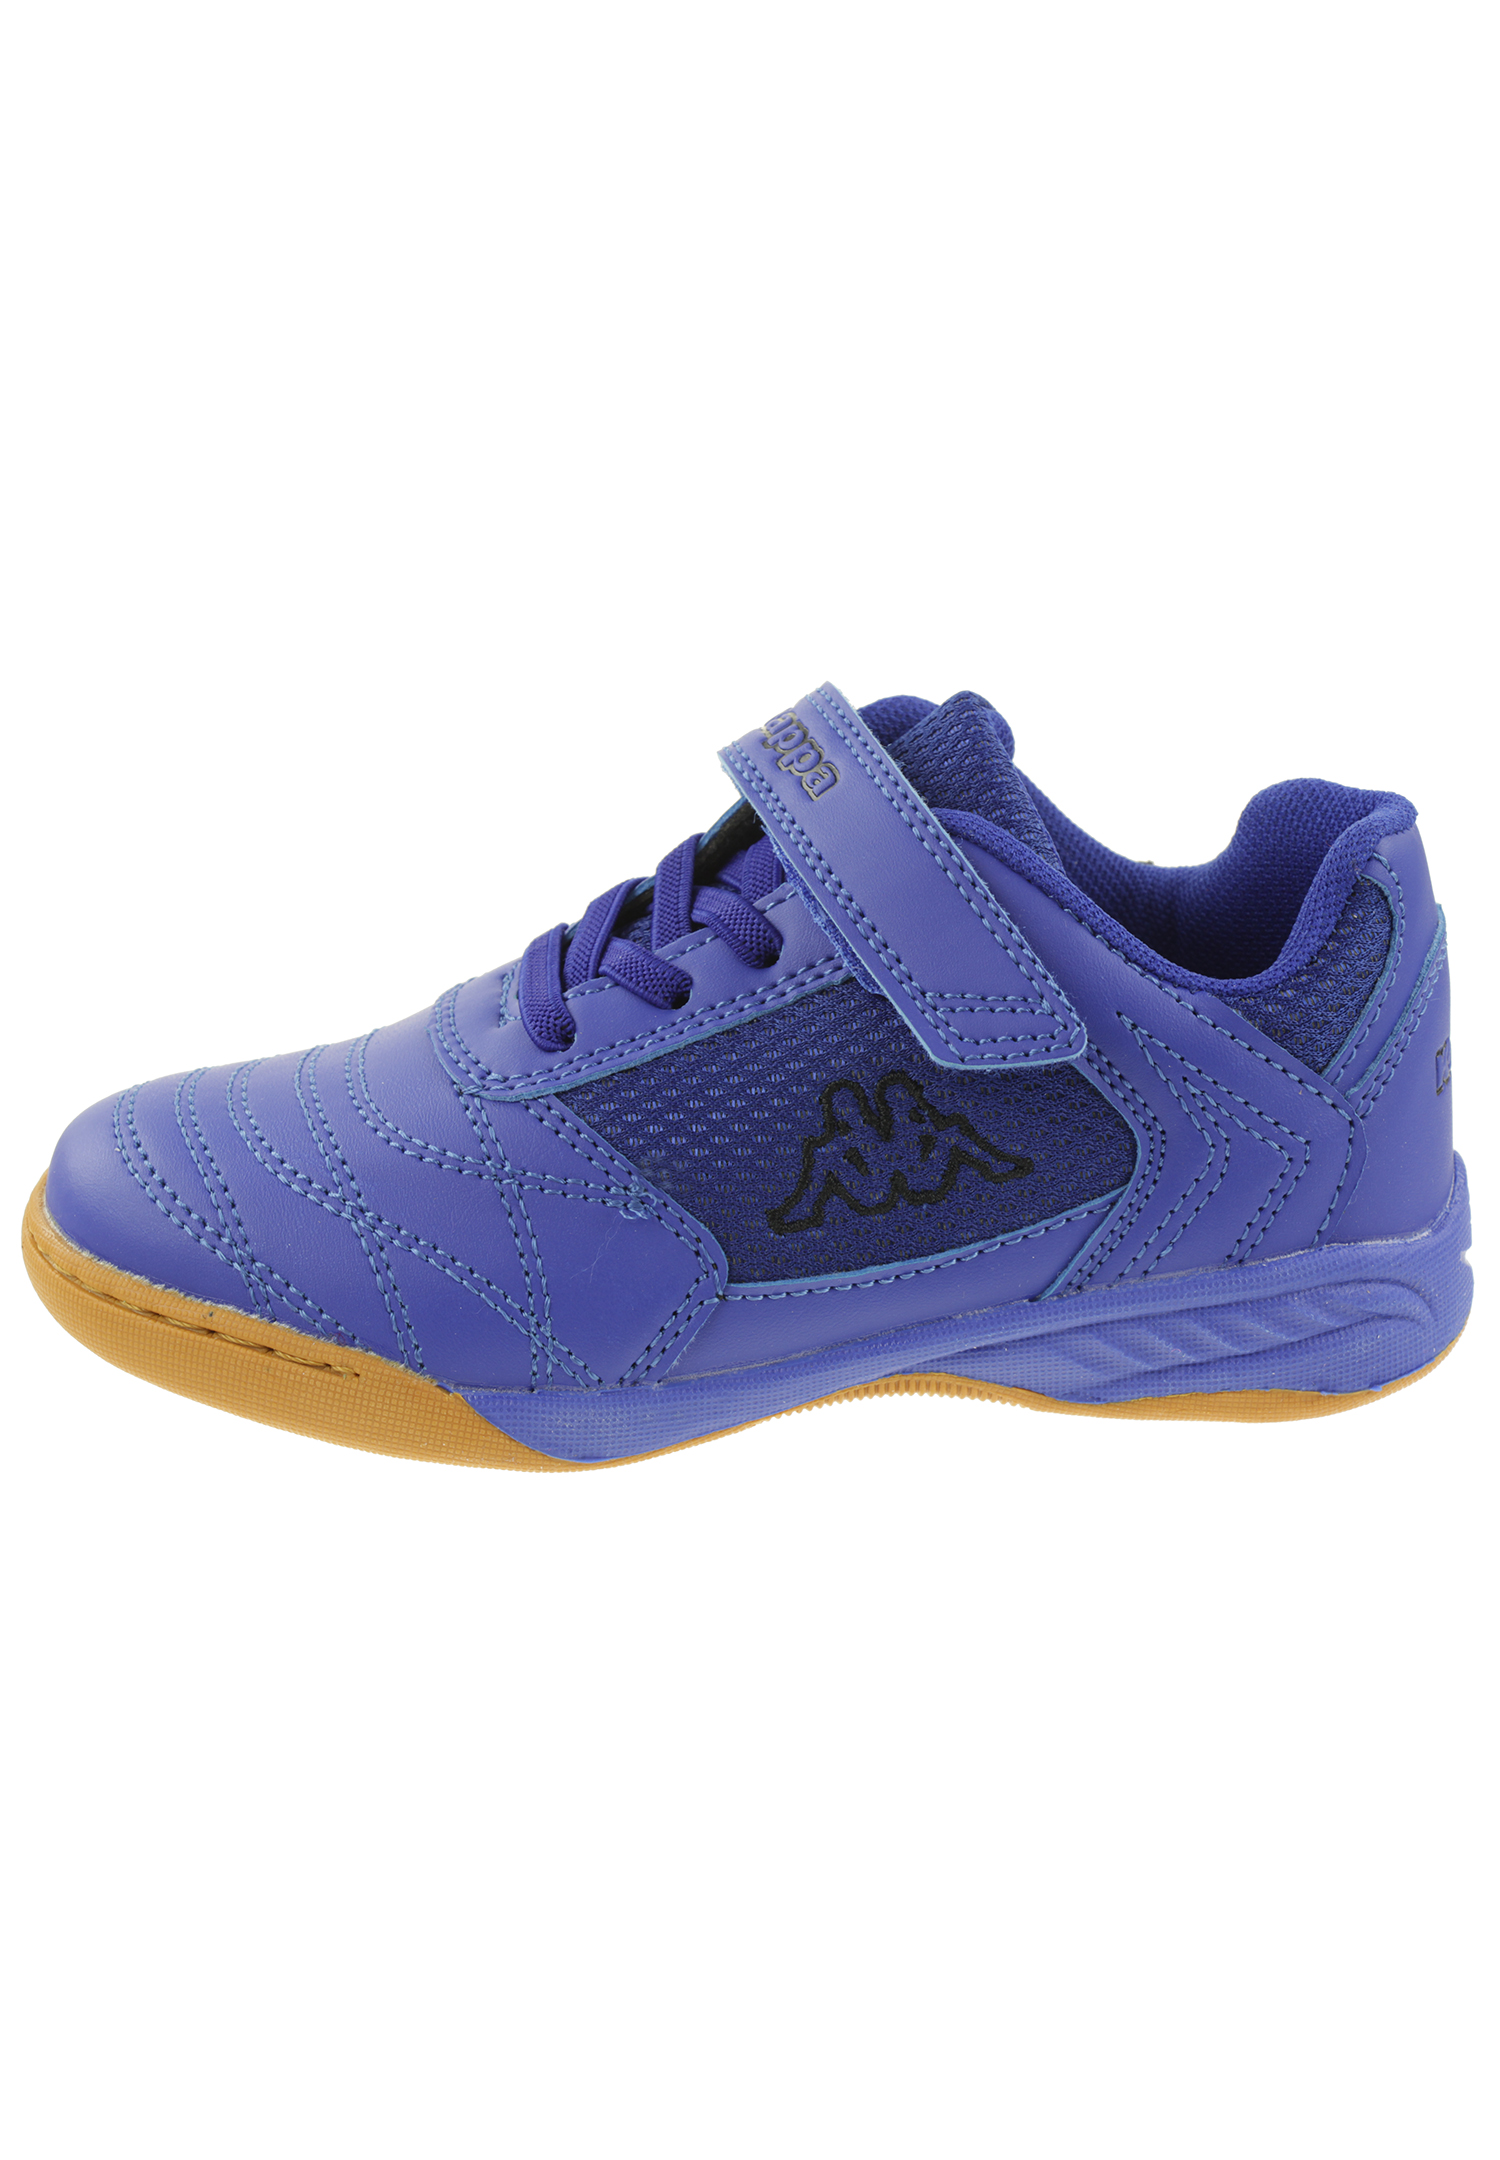 Kappa Unisex Kinder Sneaker Turnschuh 260765OCK 6011 blue/black